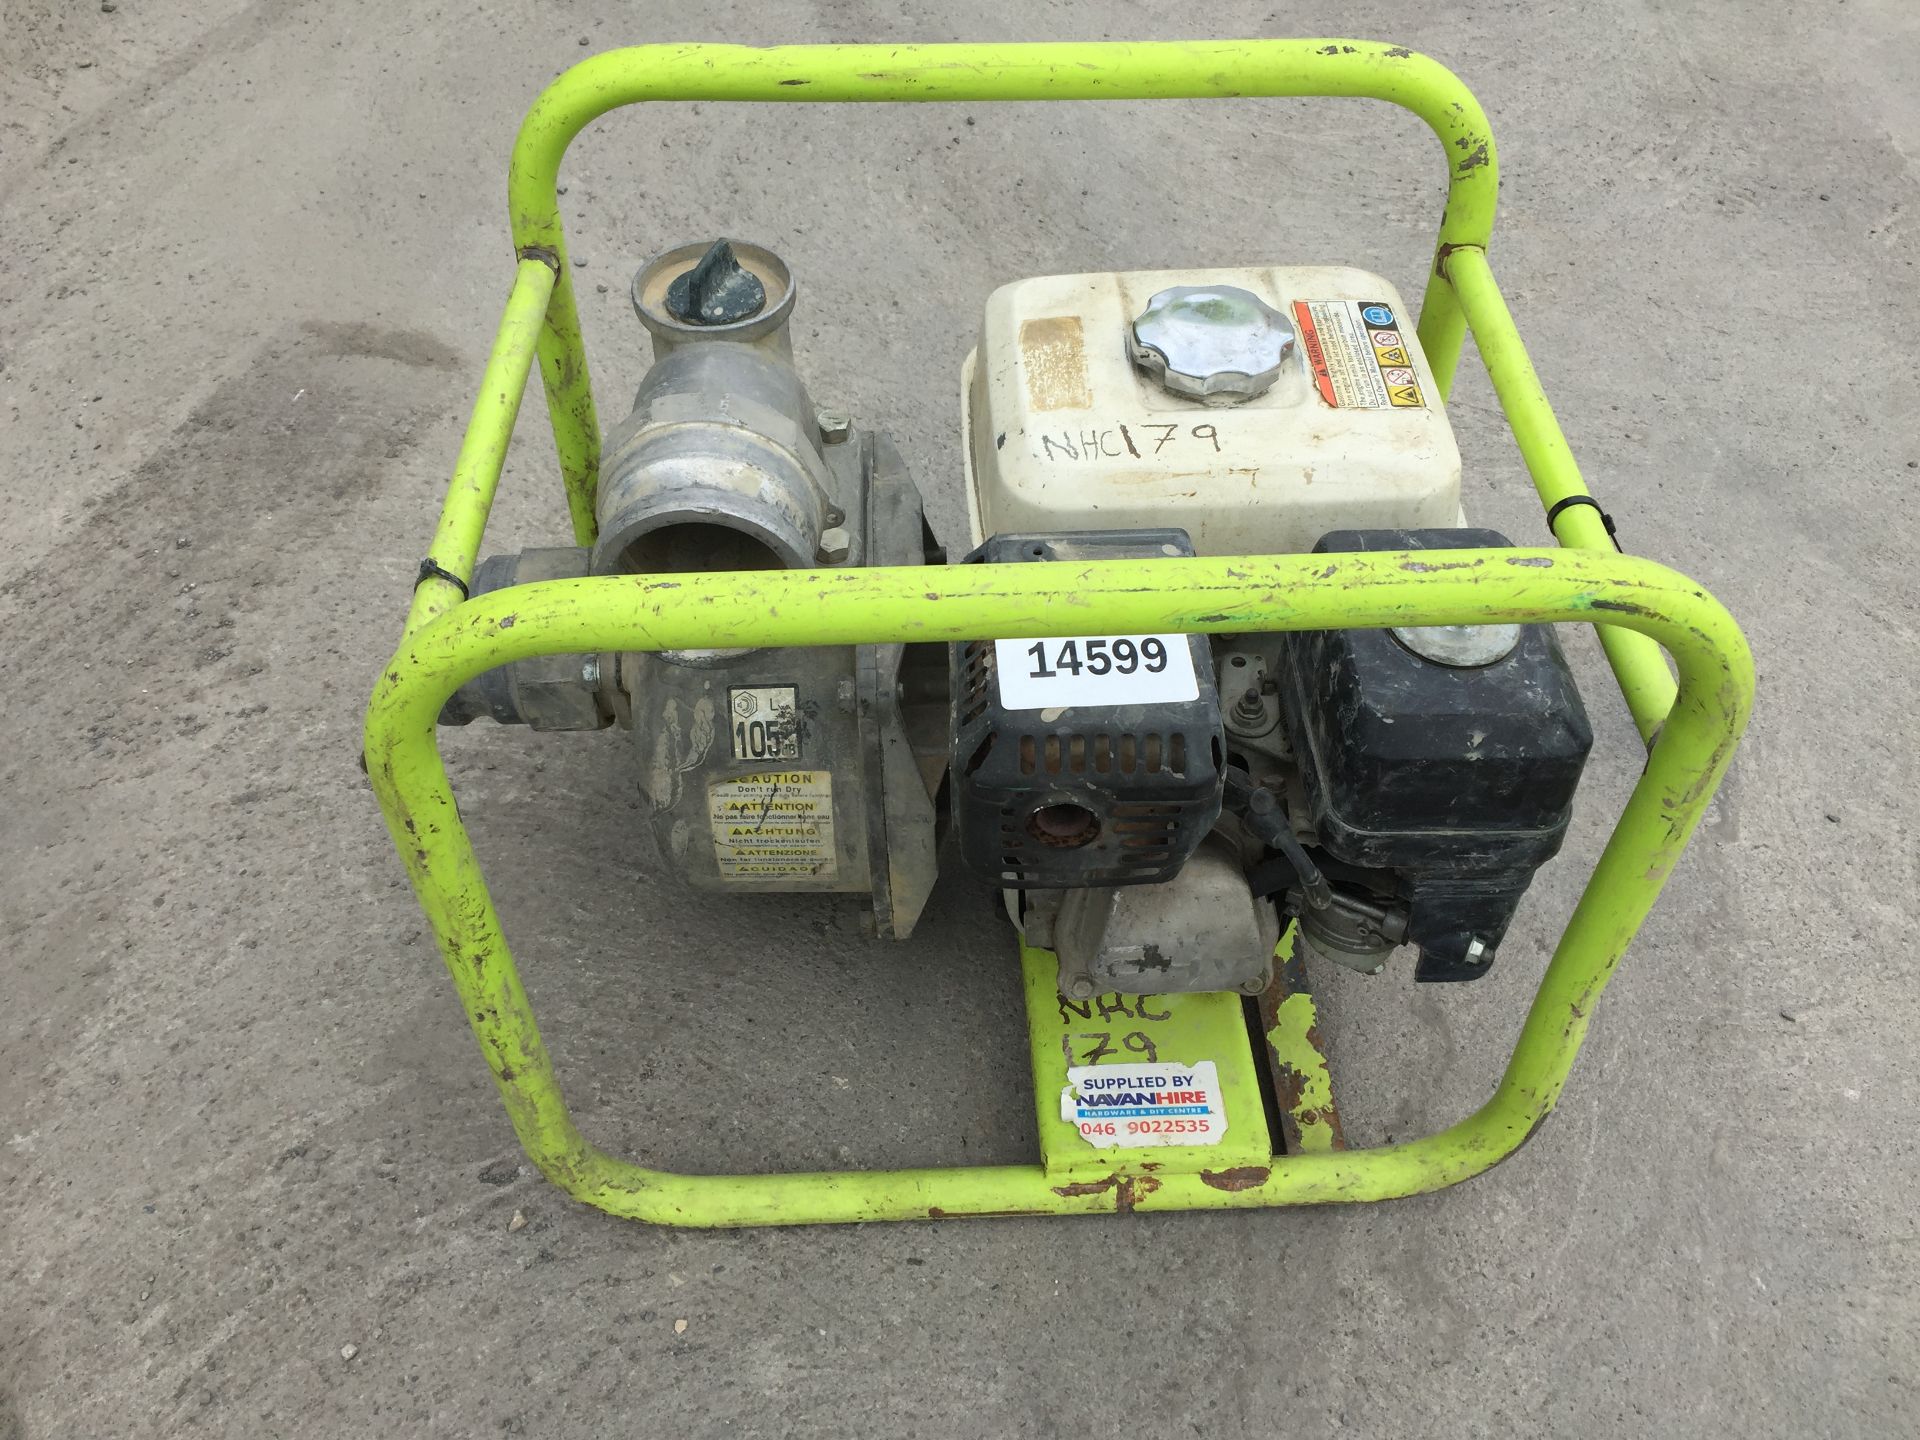 PL-14599 UNRESERVED Pramac Honda GX160 Petrol Water Pump - Image 2 of 5